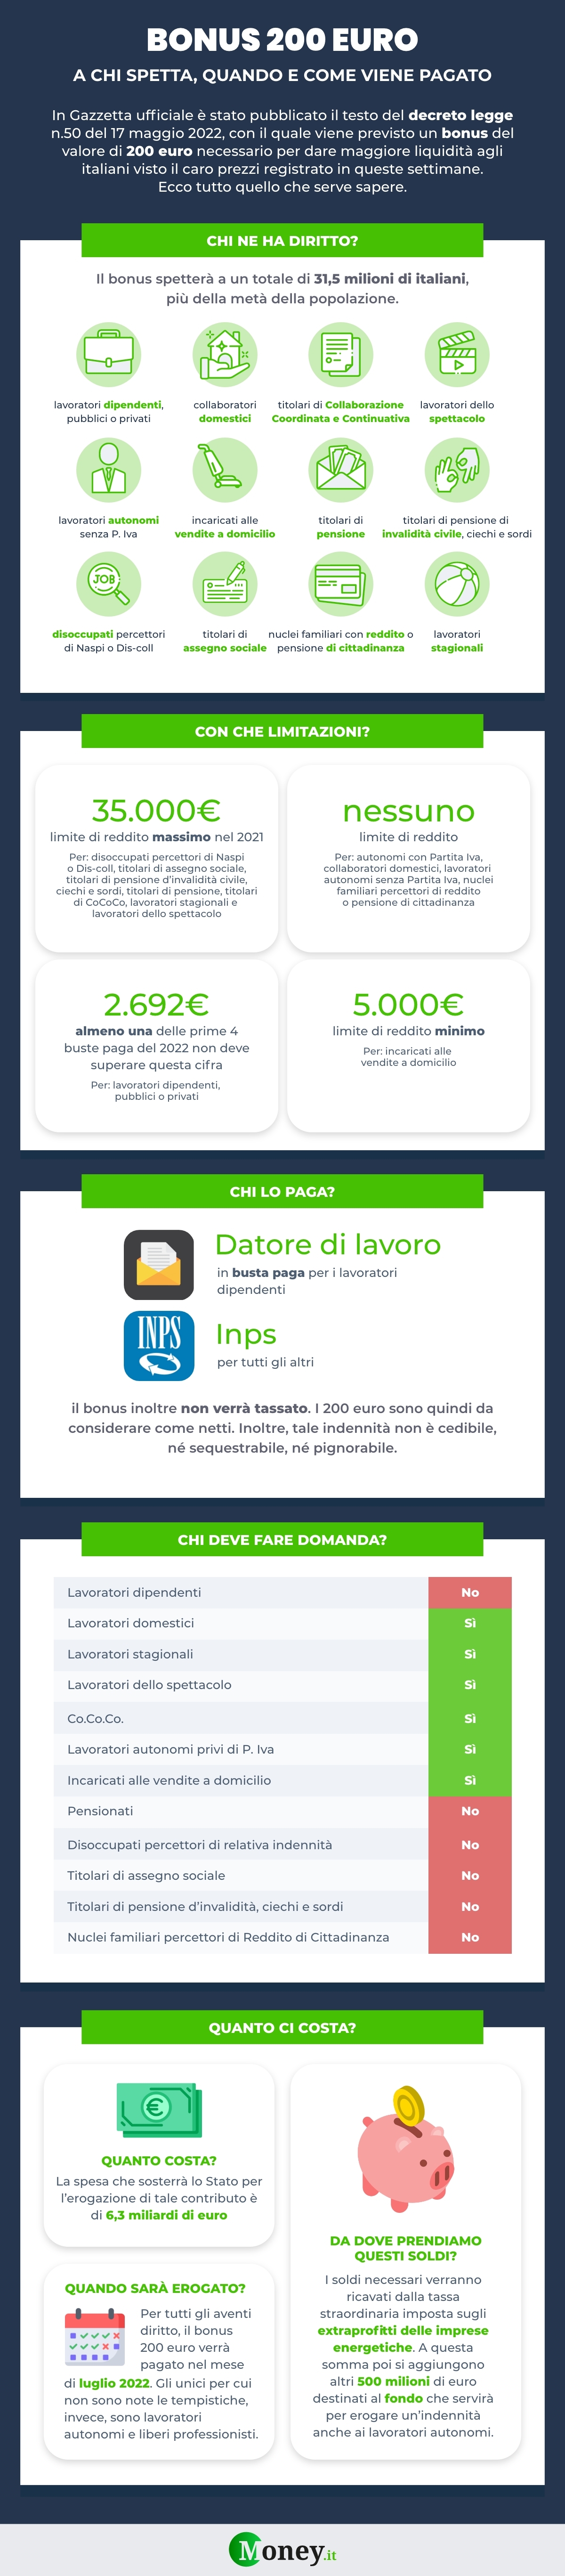 Infografica bonus 200 euro